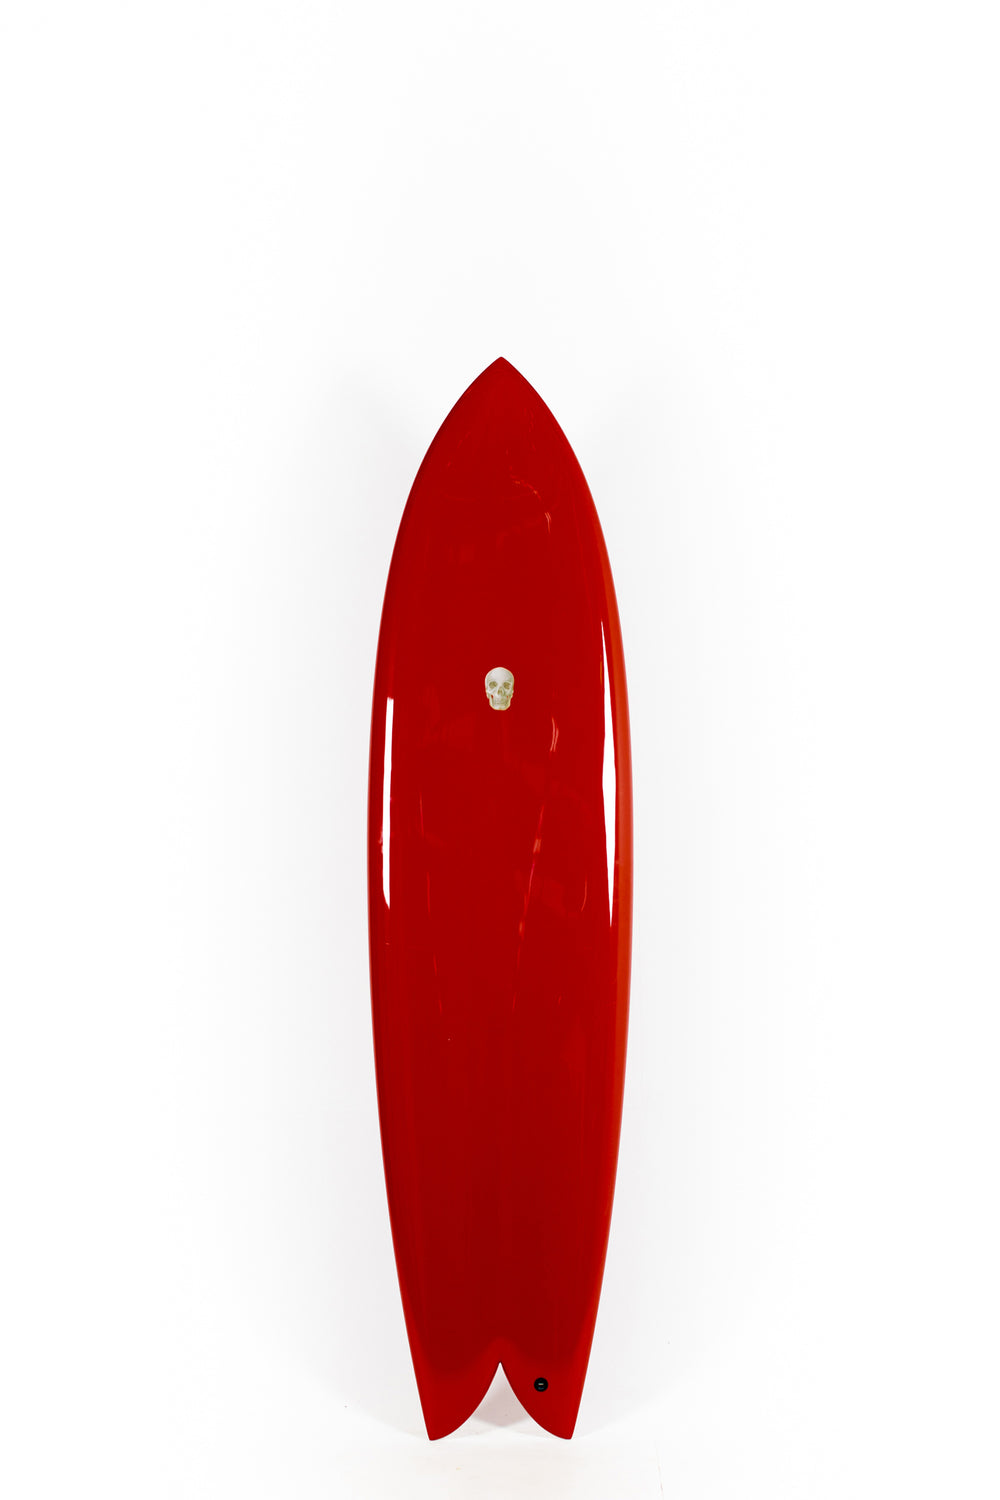 Pukas Surf Shop - Christenson Surfboards - LONG PHISH - 7'0